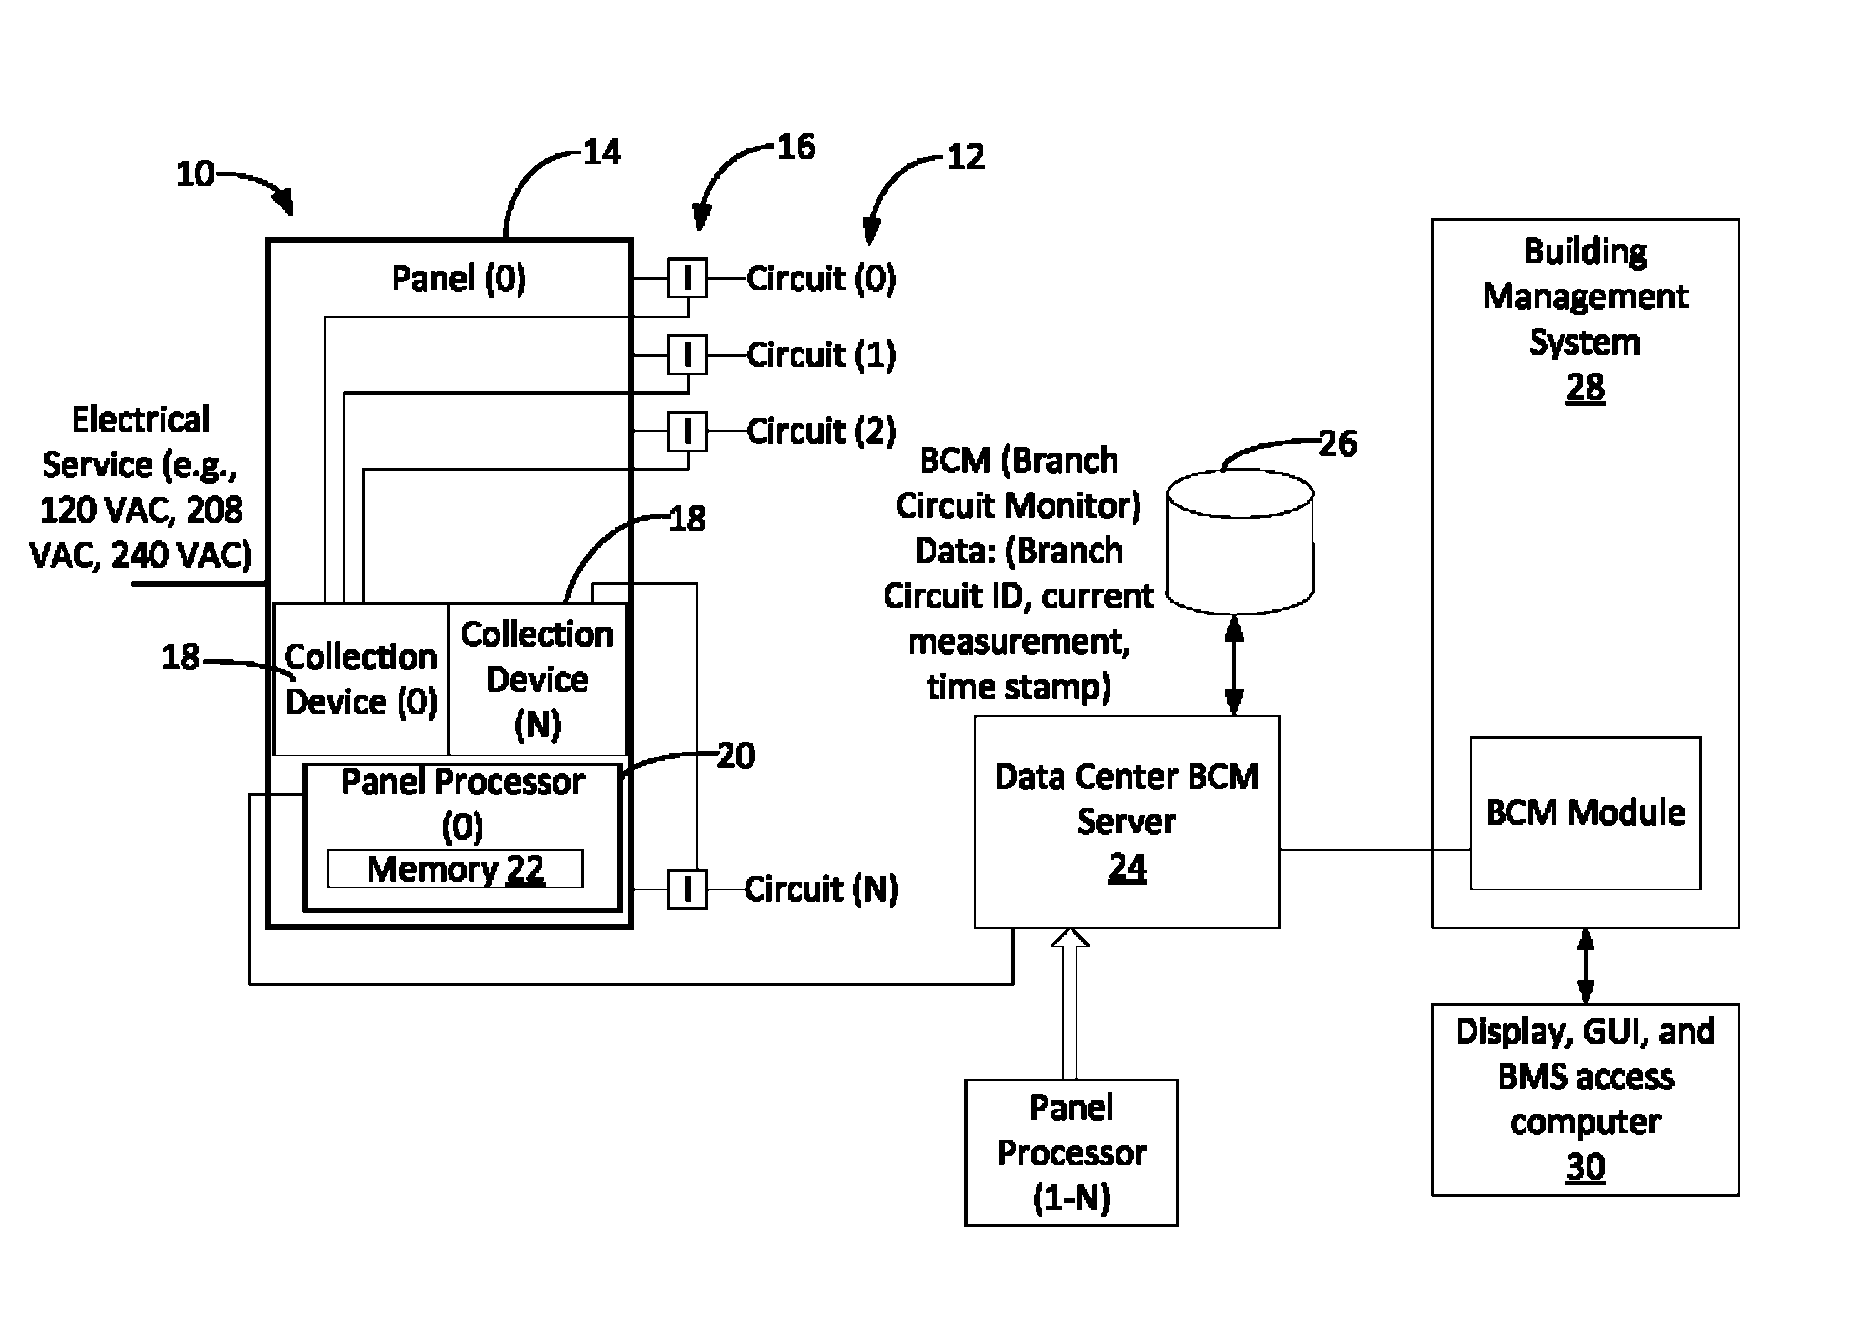 Branch circuit monitor